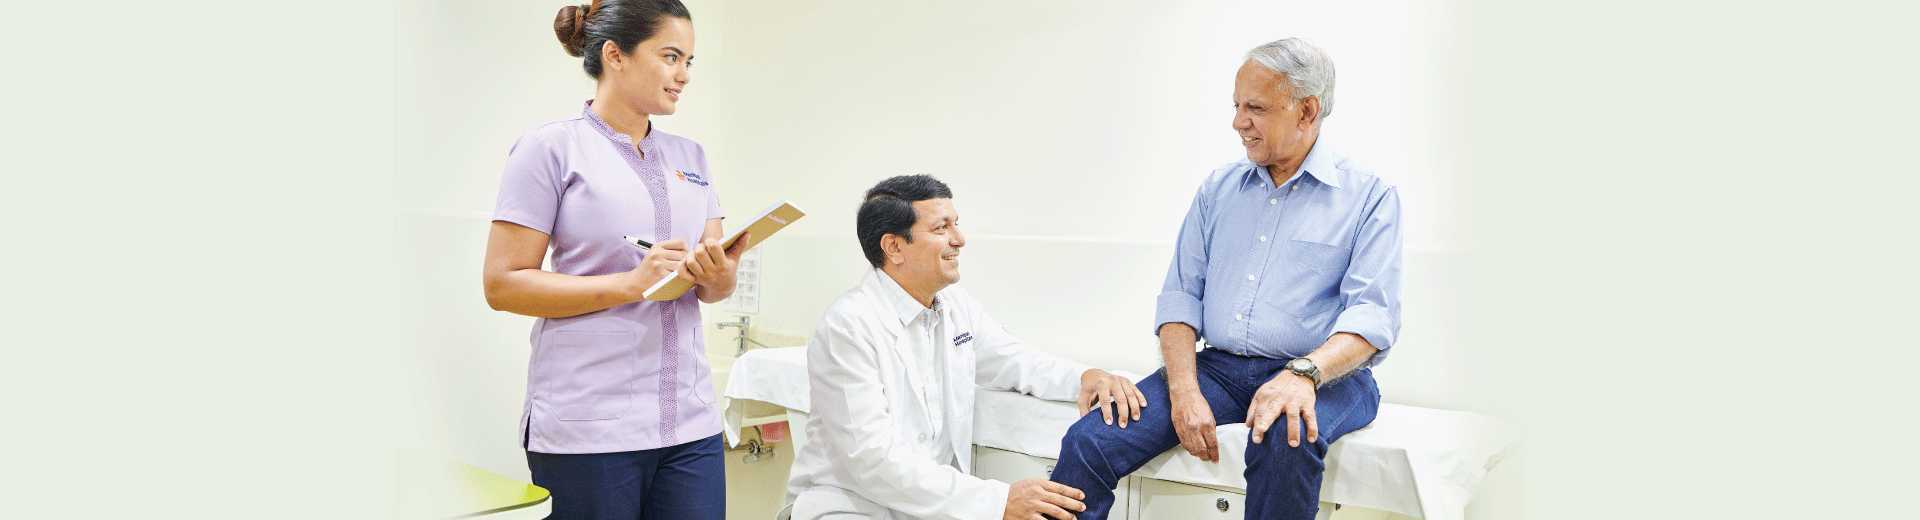 Best Orthopedic Hospital in Bangalore